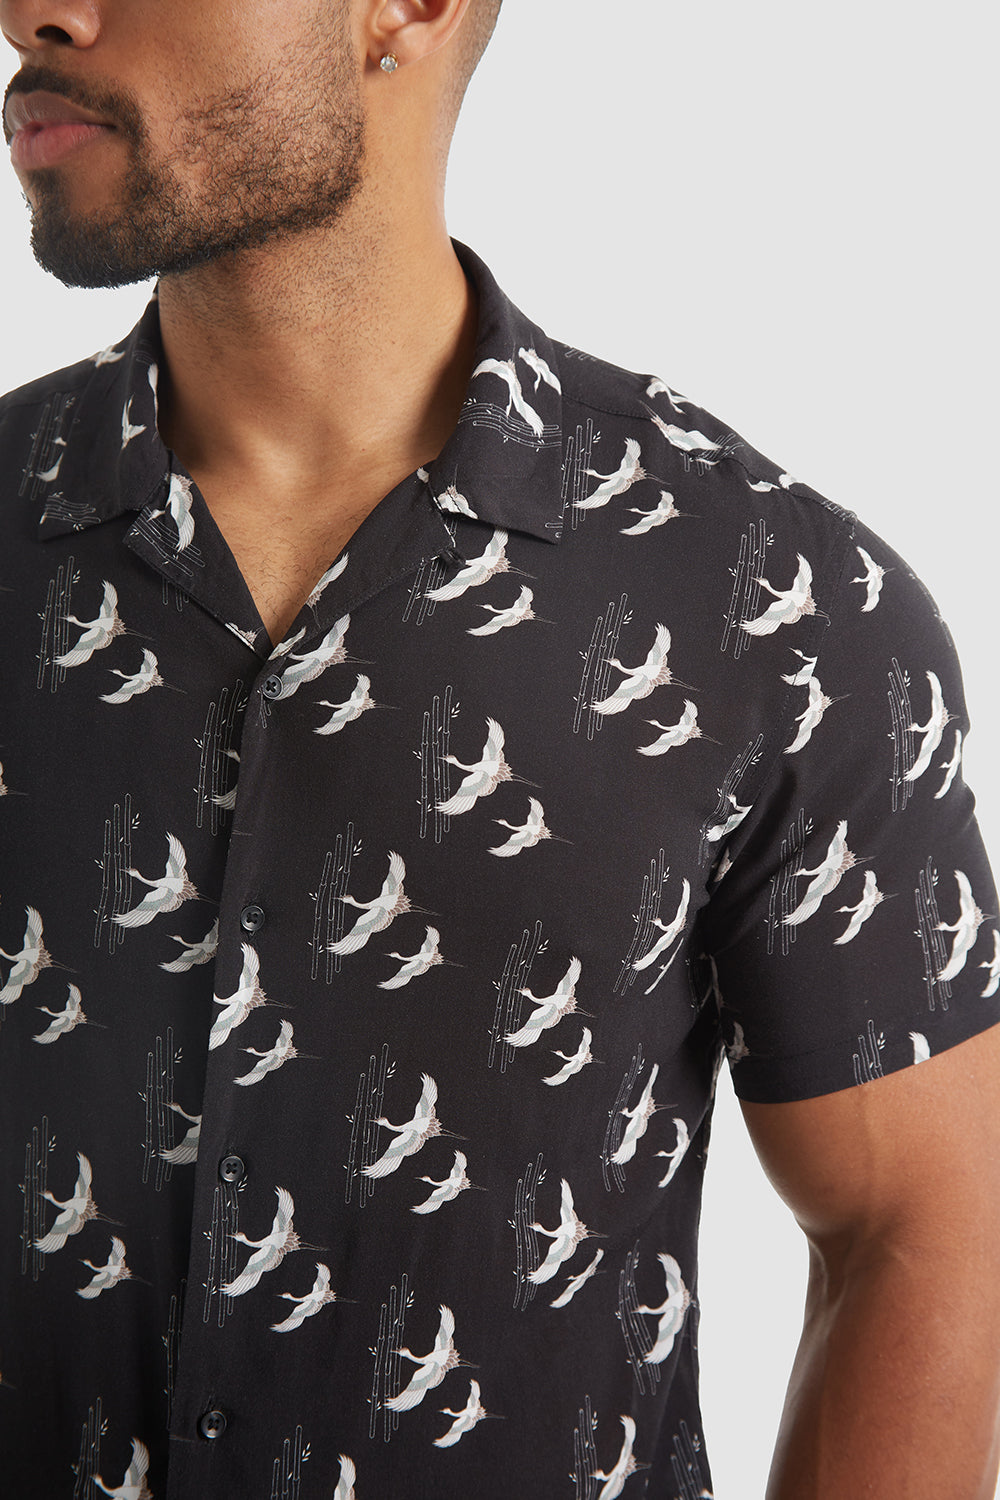 Tailored Athlete Athletic Fit Oriental Bird Print Shirt, L